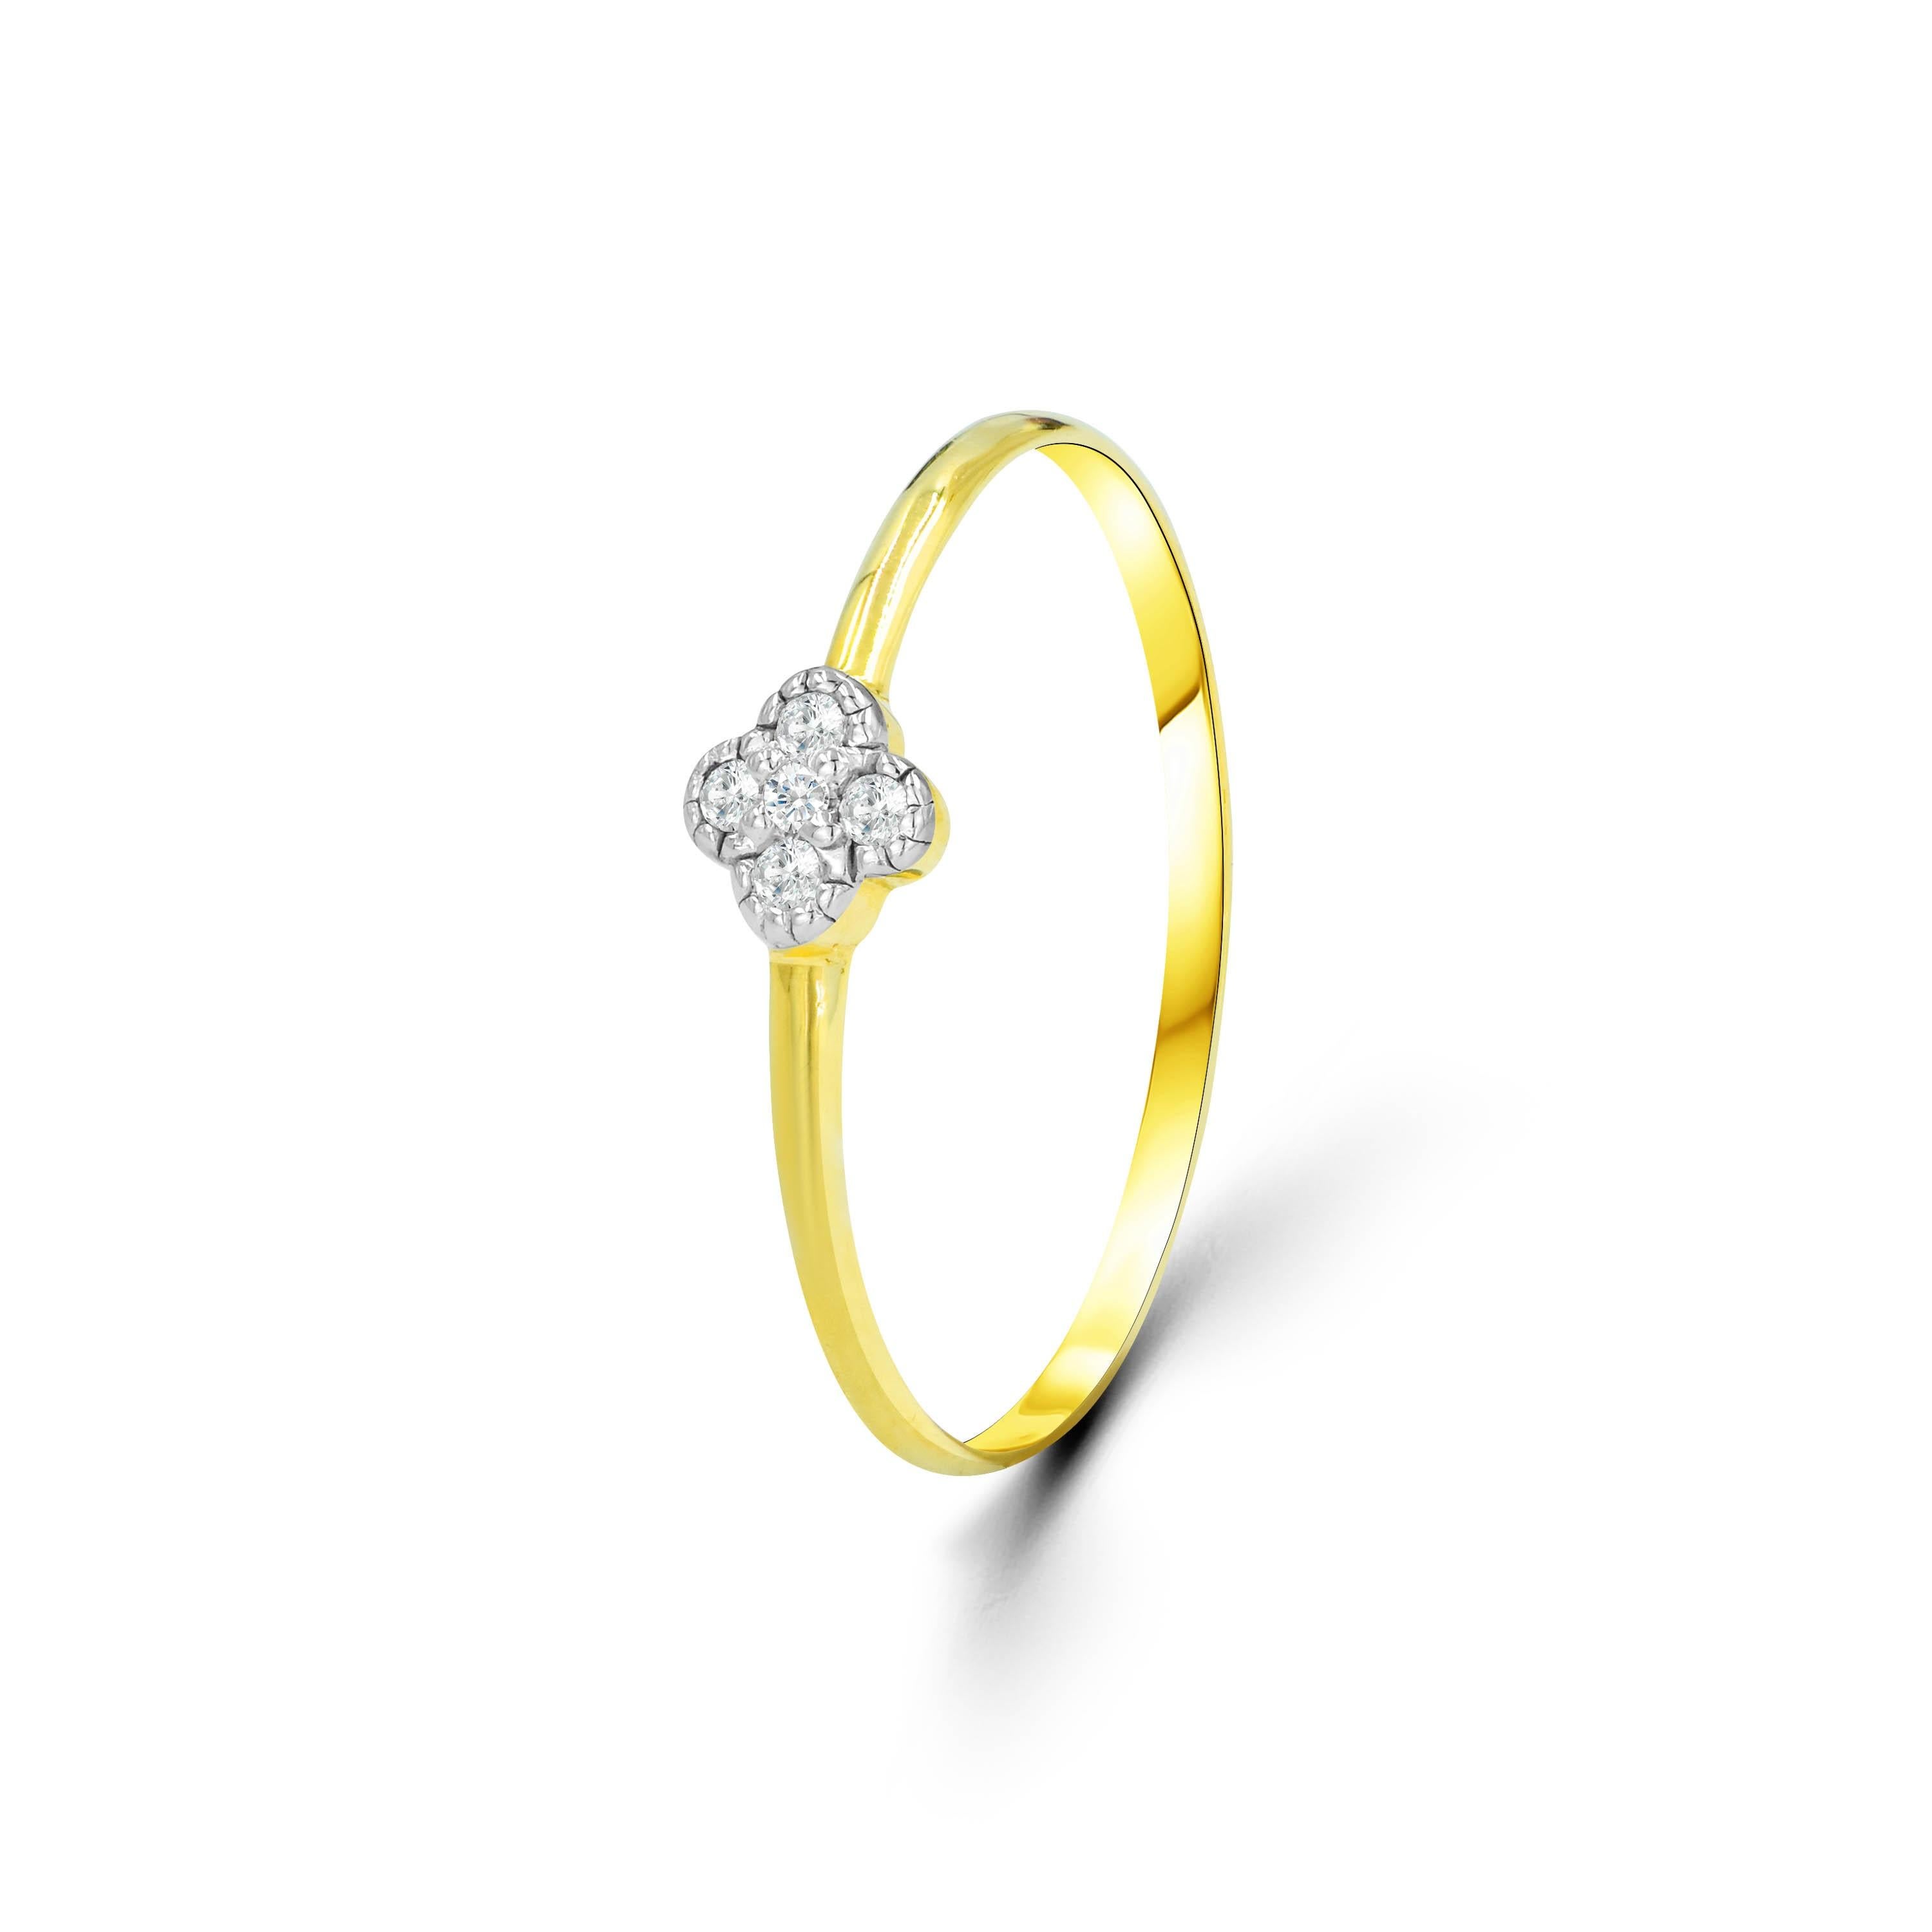 Im Angebot: 14k Gold Kleeblatt-Ring Dainty Minimalistischer Diamantring, stapelbar () 3